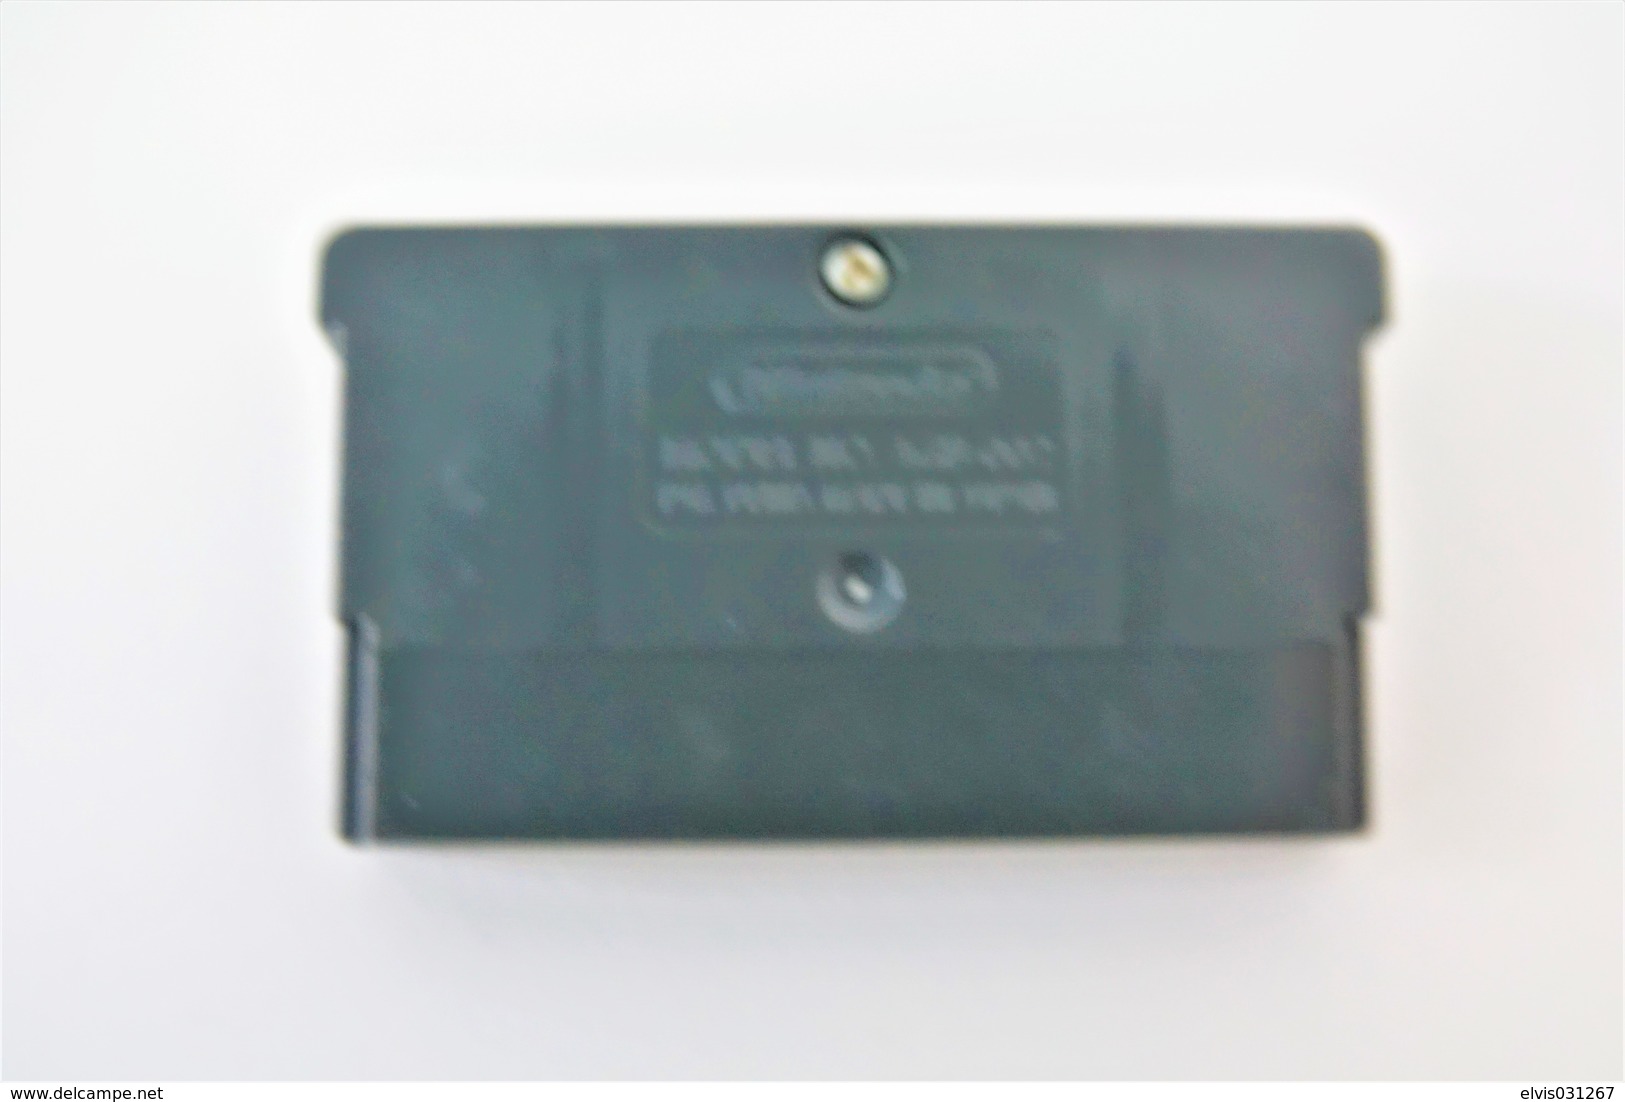 NINTENDO GAMEBOY ADVANCE: THE SPONGEBOB SQUAREPANTS MOVIE - THQ - 2004 - Game Boy Advance